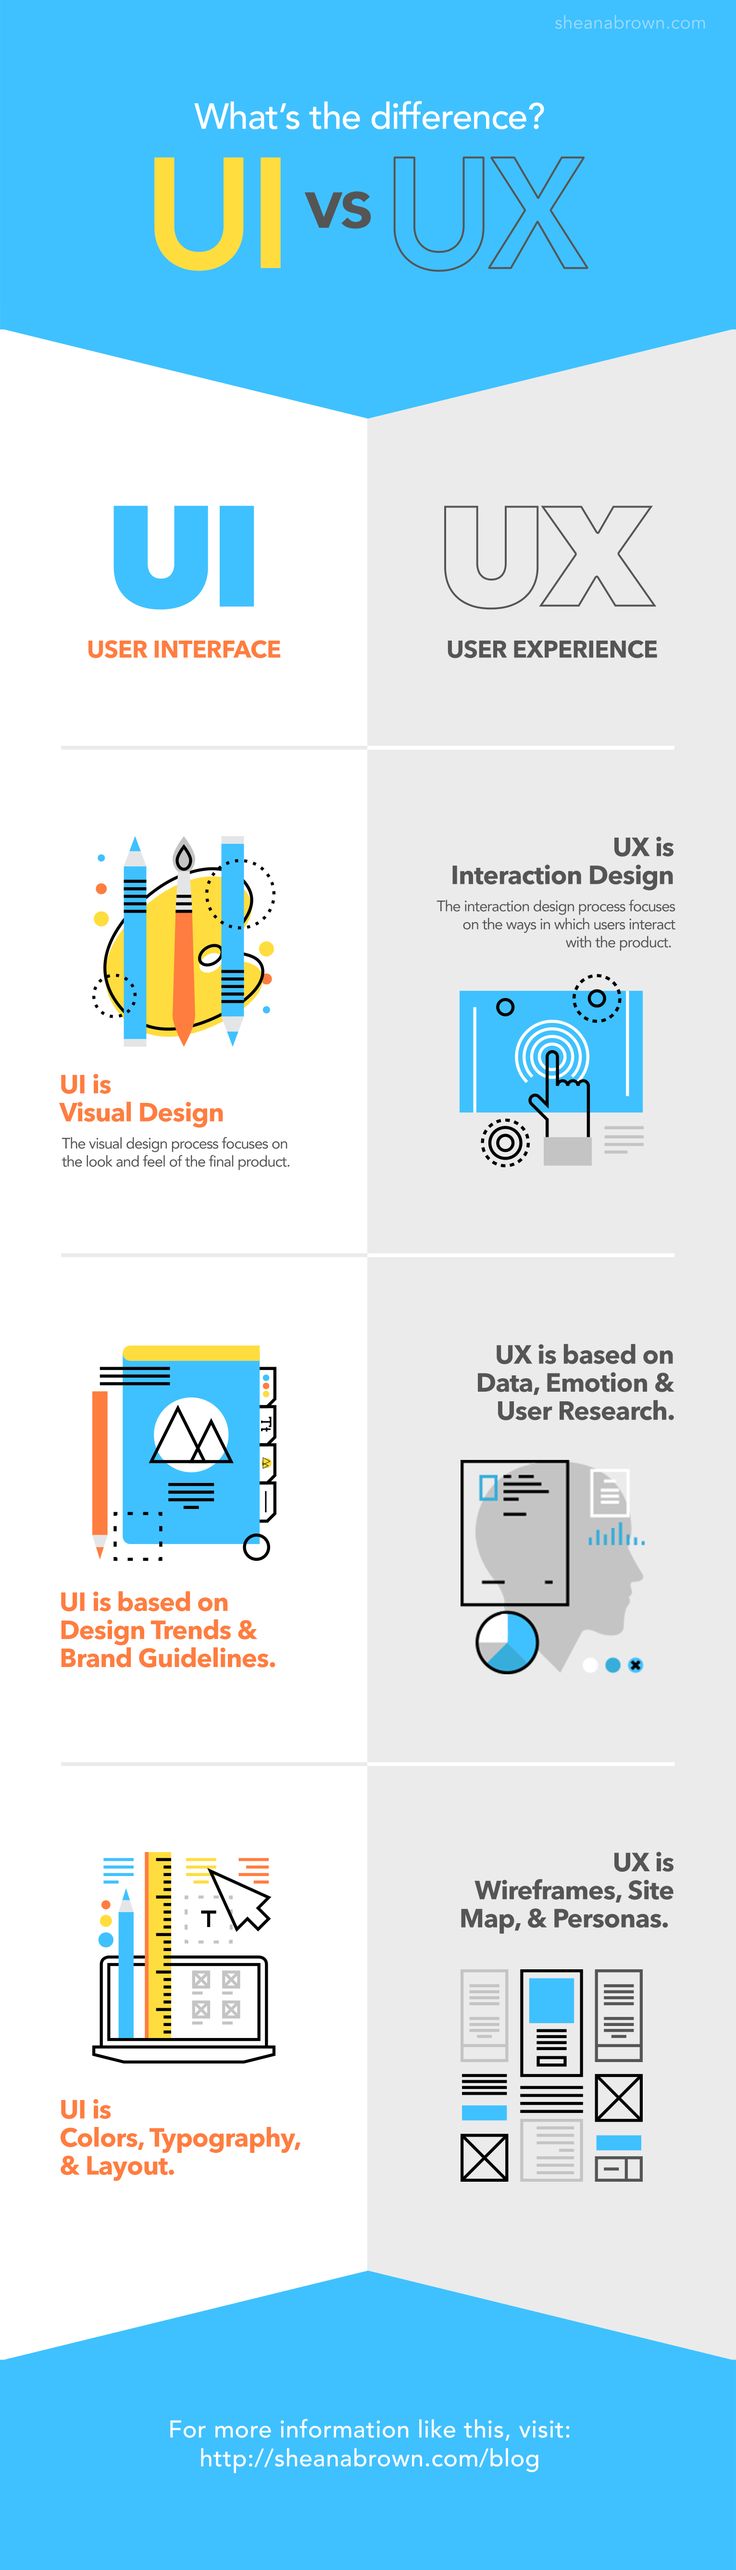 User Interface vs User Experience (UX) Design